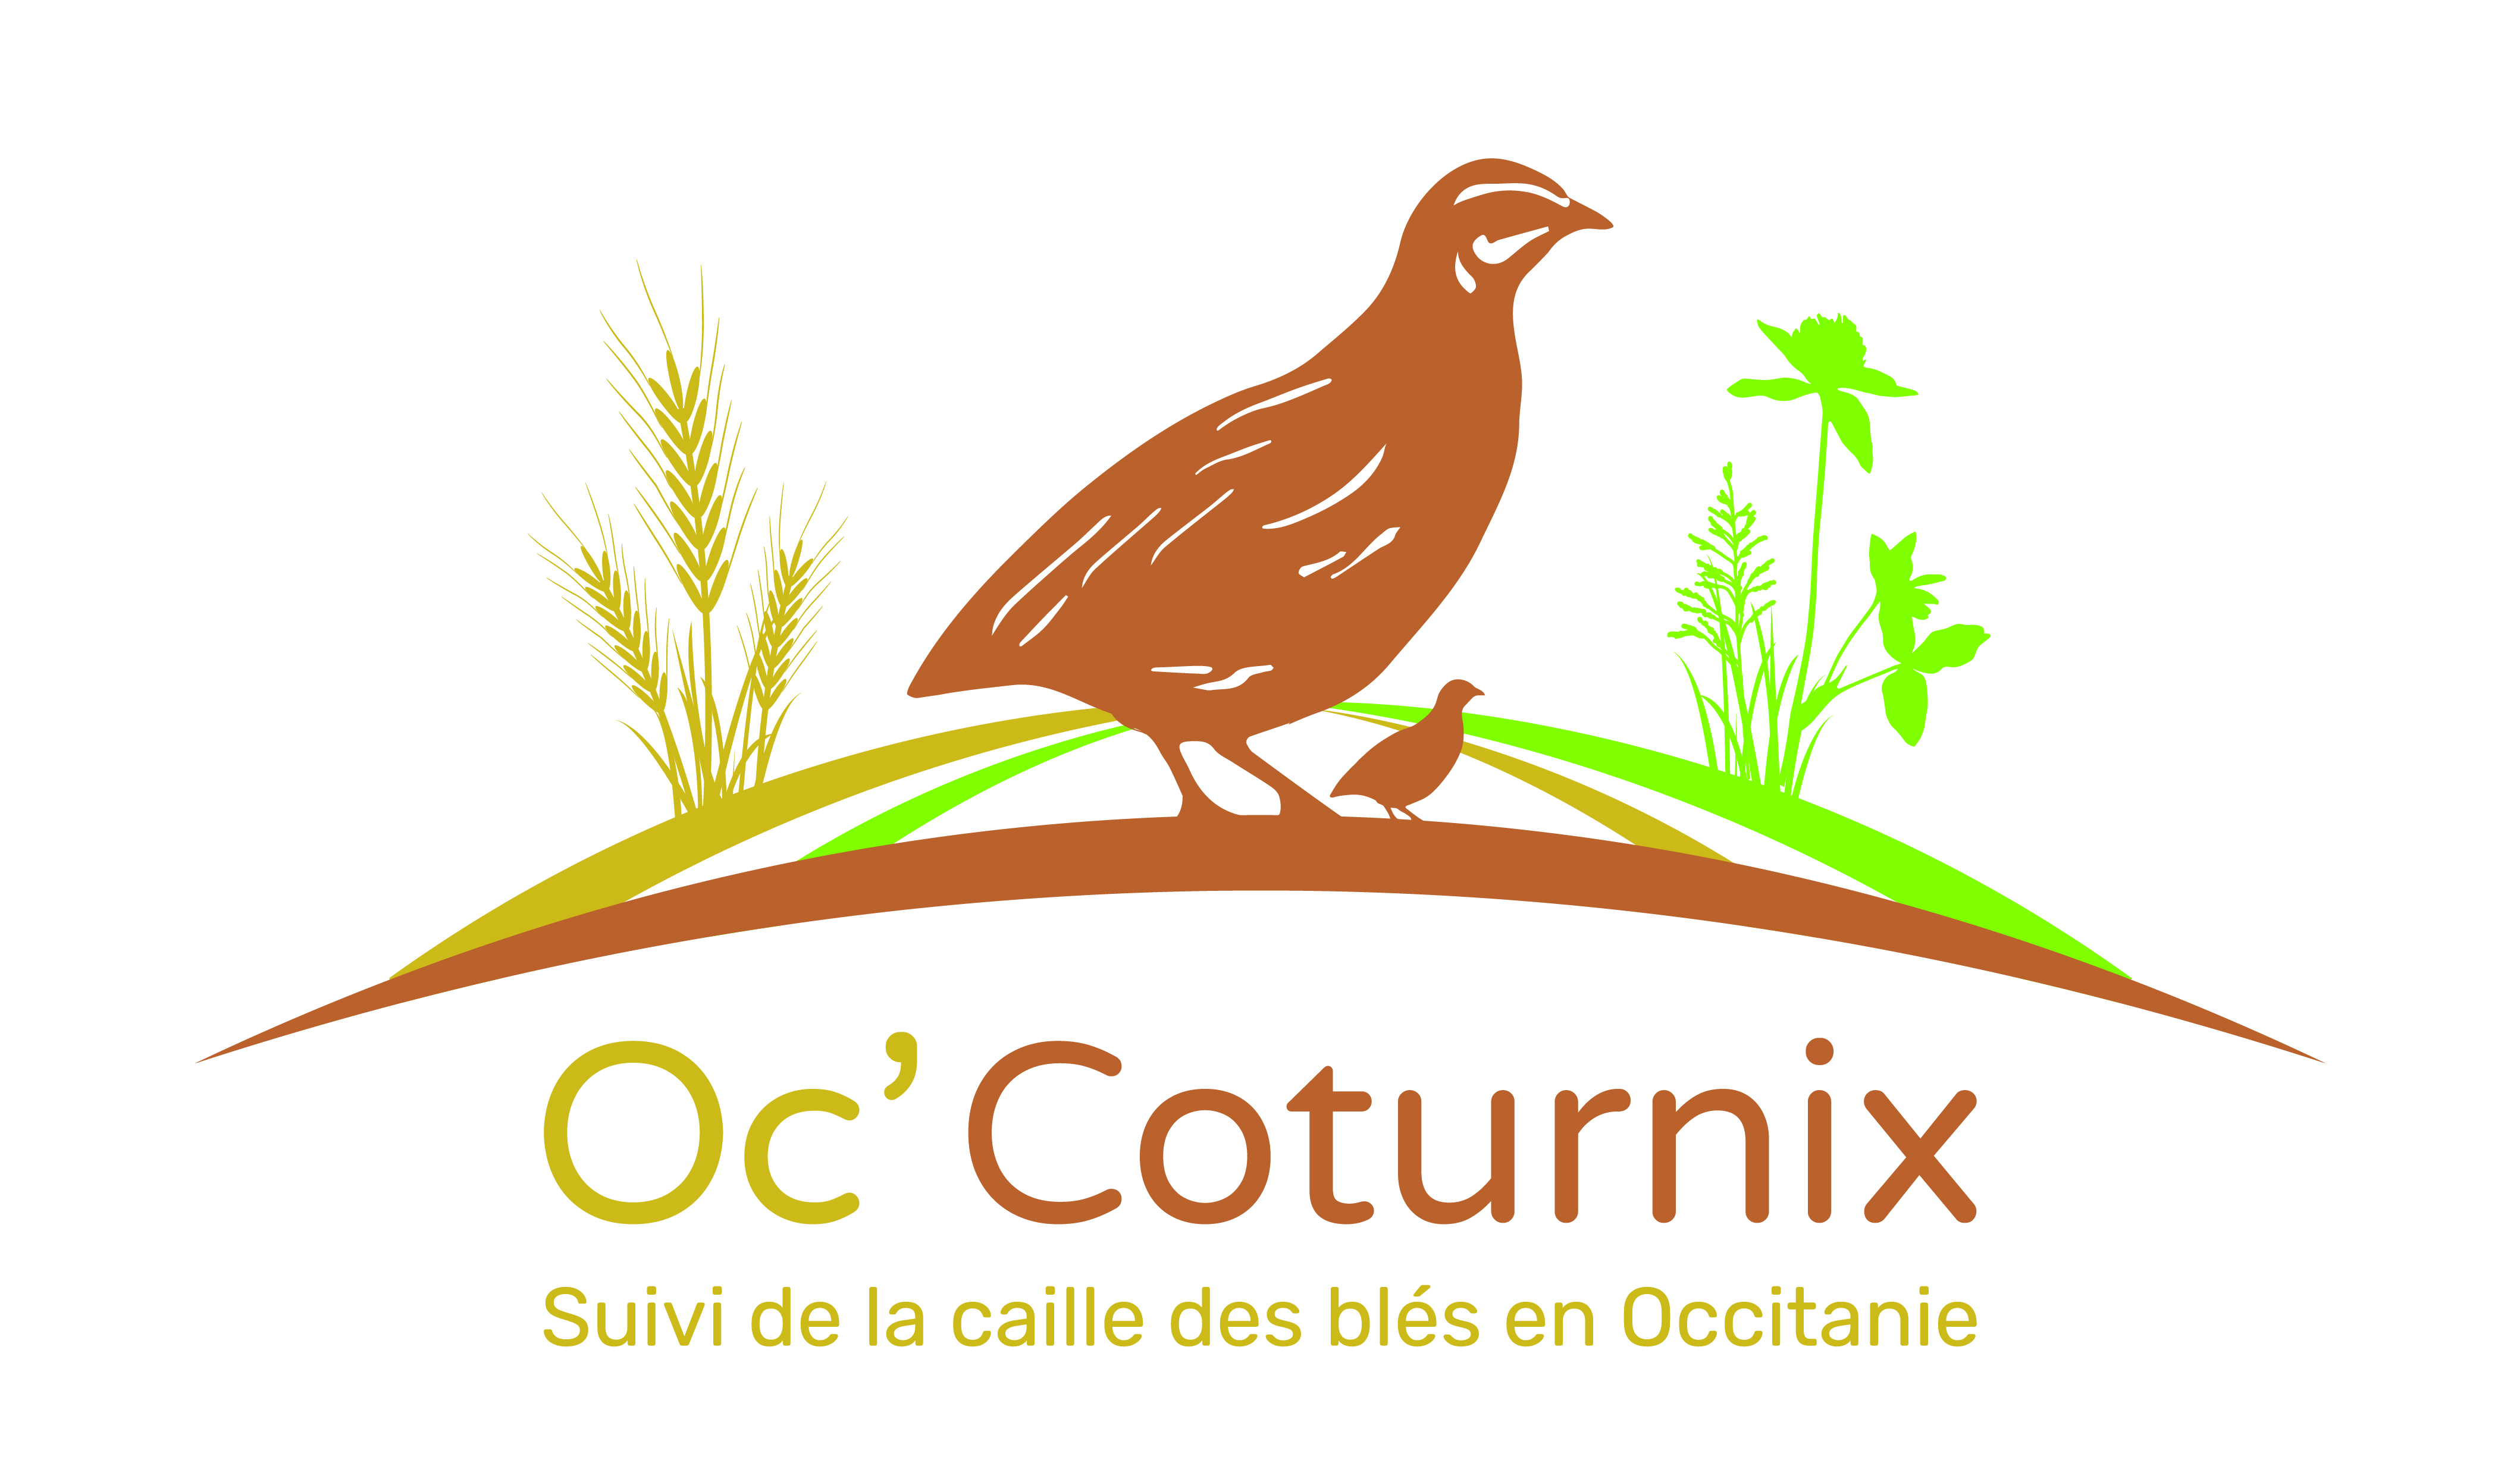 Oc'Coturnix : La campagne comptage au chien continue!